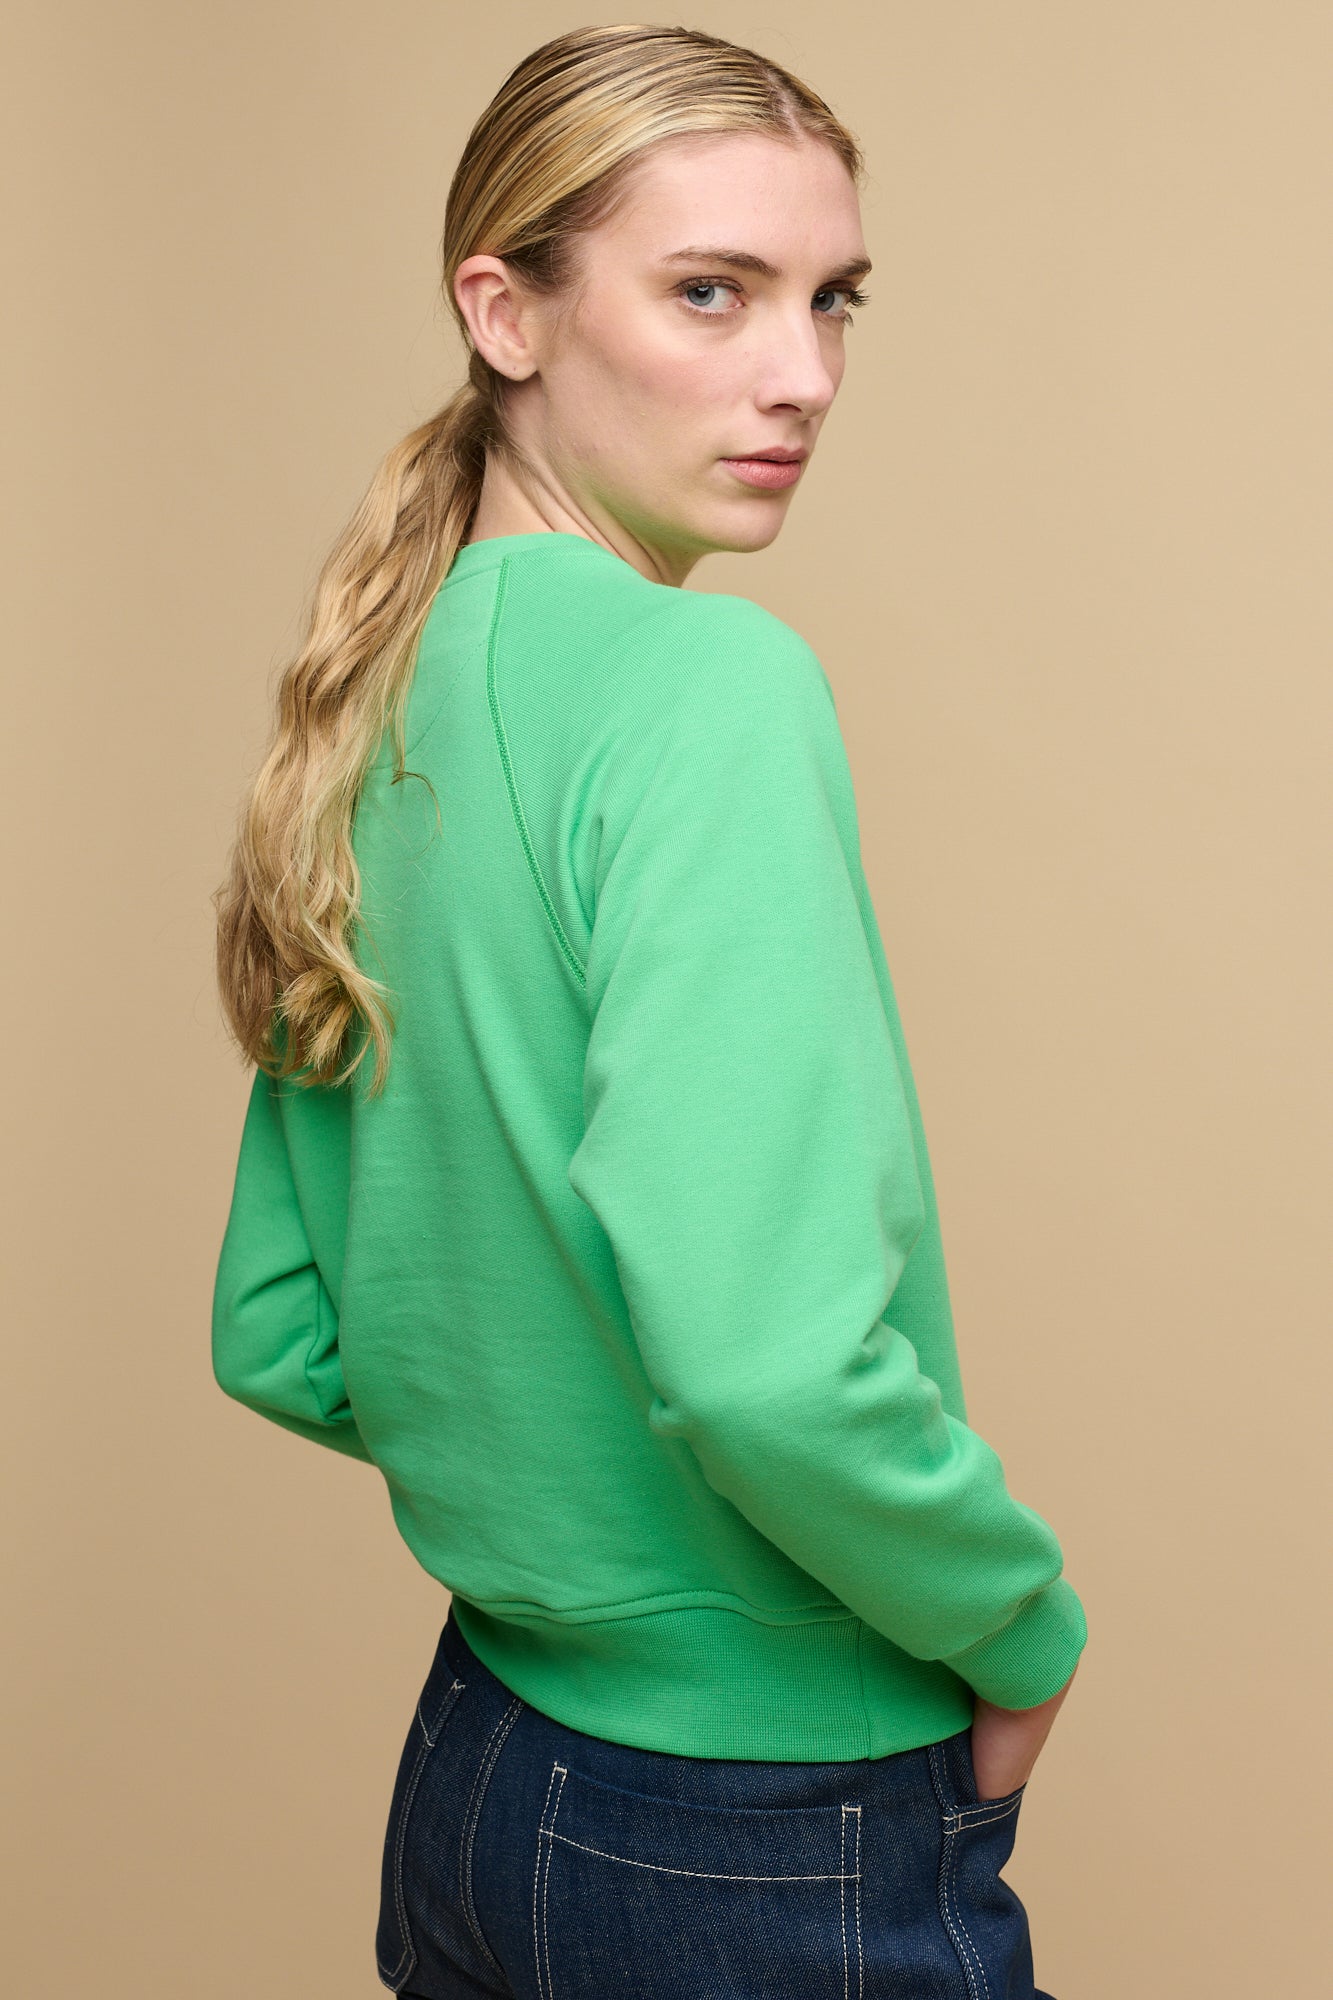 Hip up image of the side of female wearing raglan sweatshirt in apple green